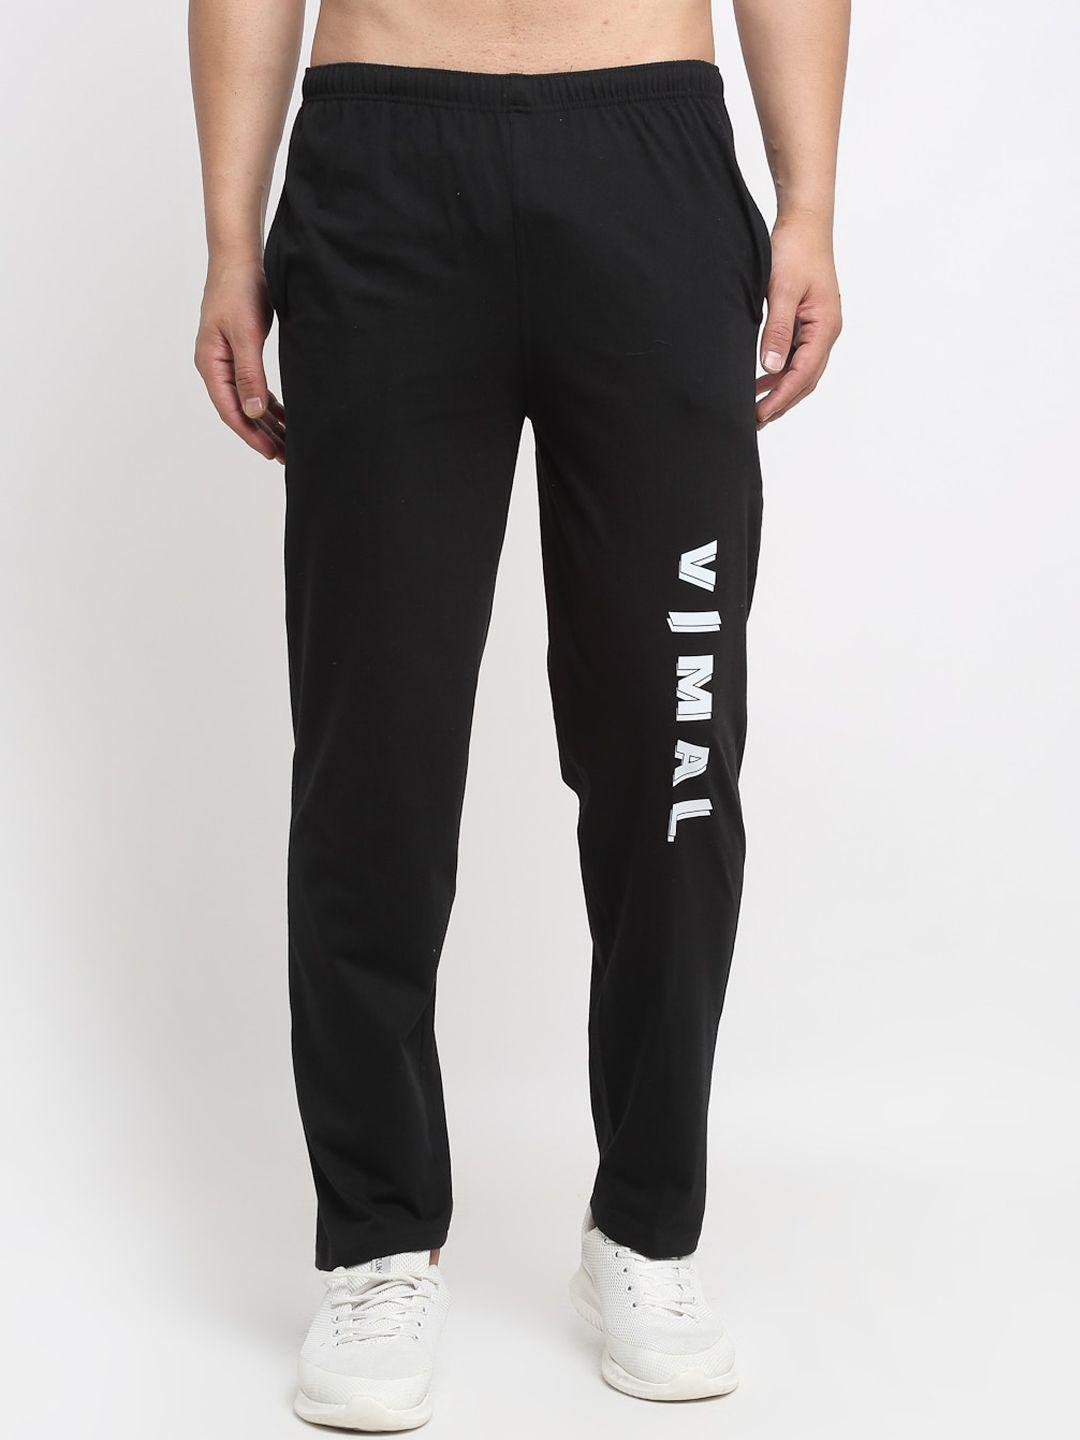 vimal-jonney-men-black-&-white-printed-track-pants